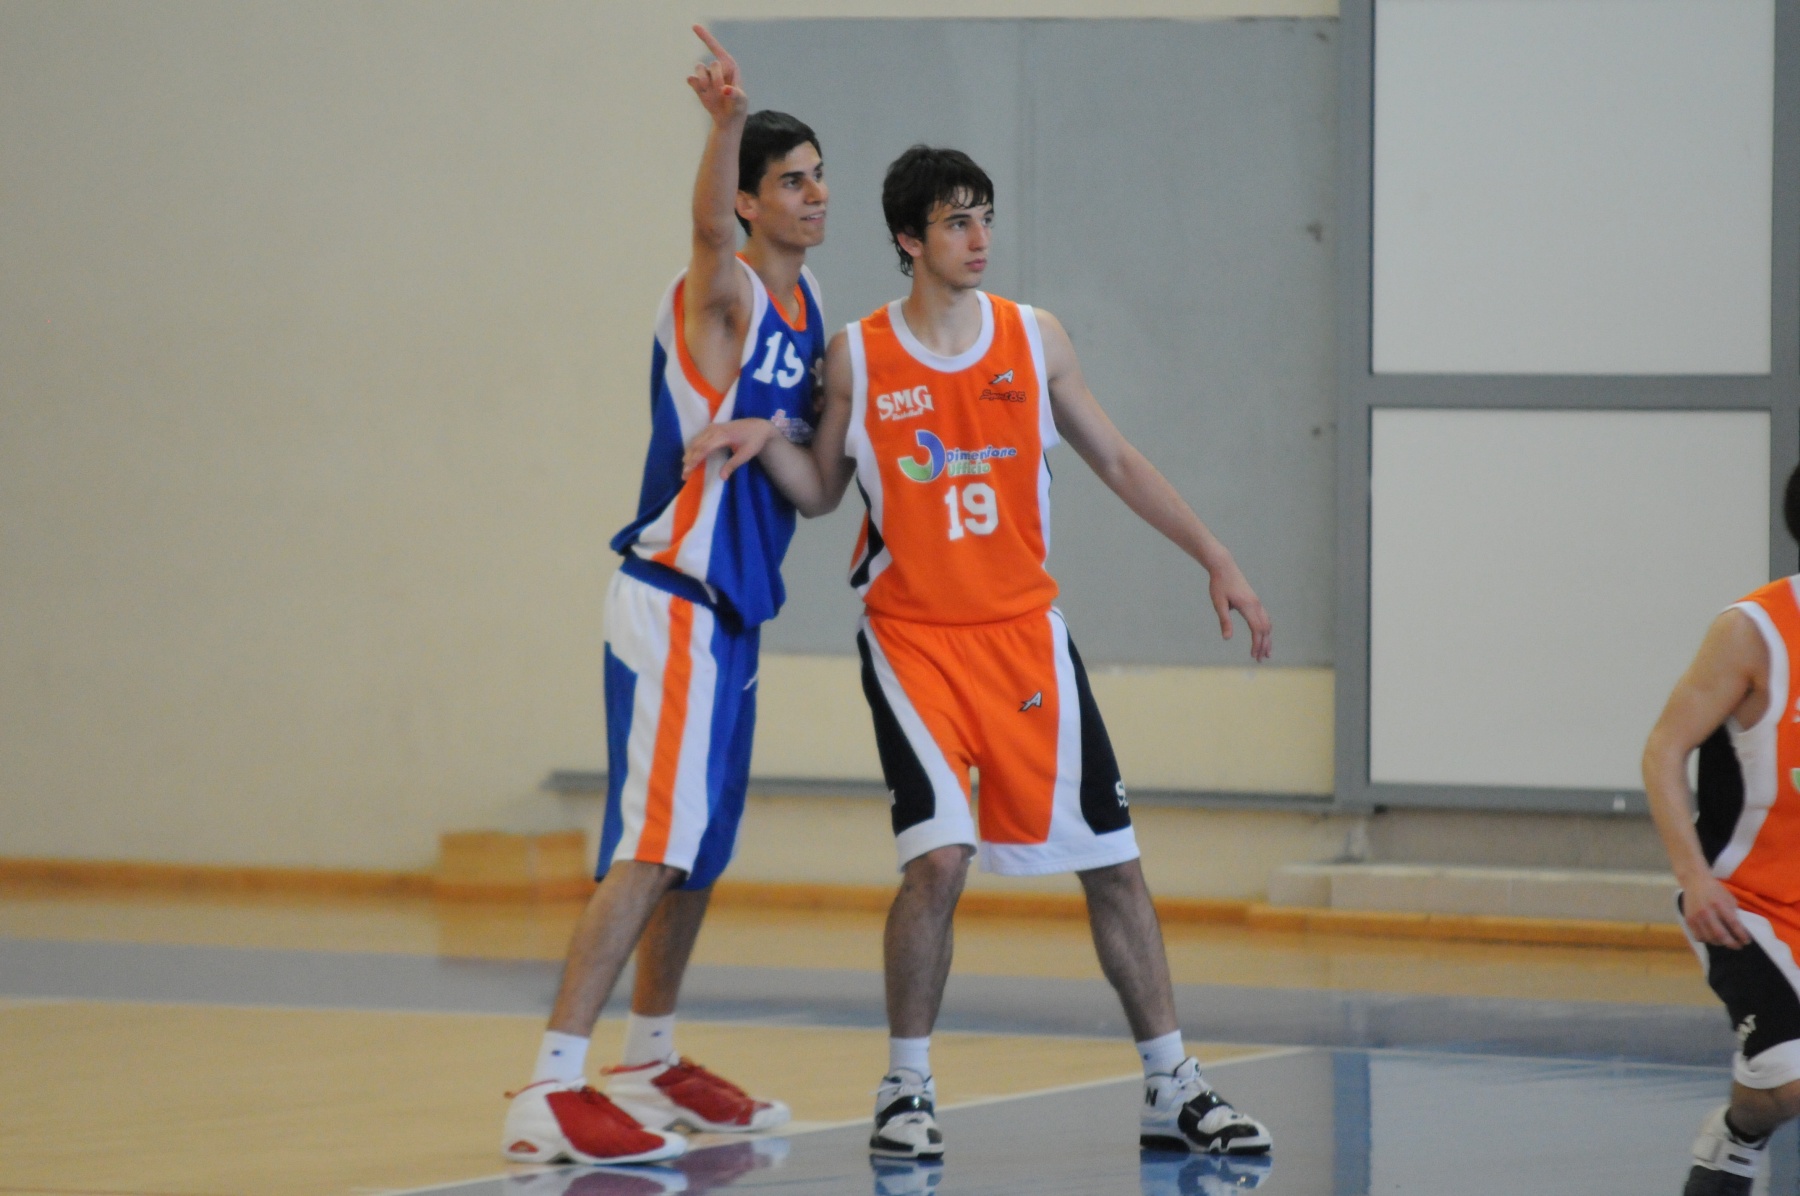 2010-05-23-SMG-Vivibasket-Napoli-544